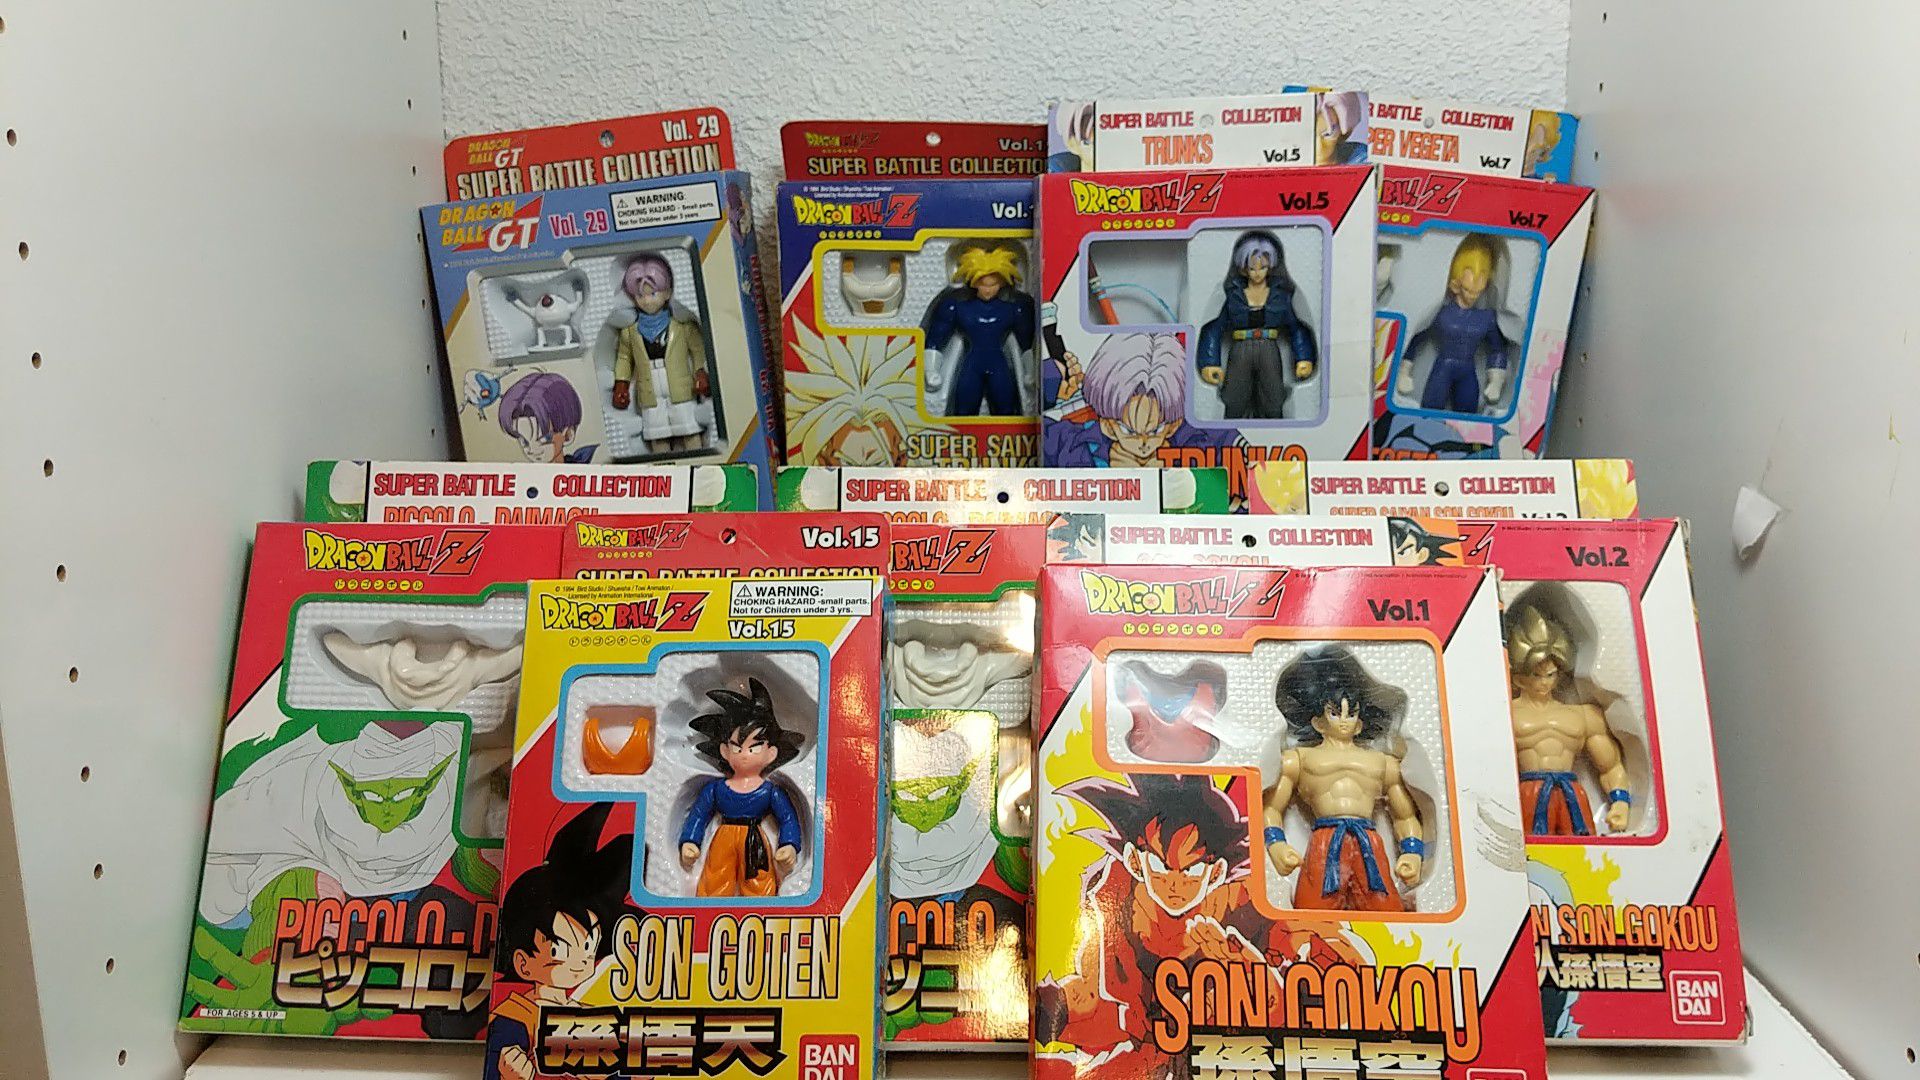 Dragon Ball Z Super battle collection Lot of 9 Figures - Vegeta, Trunks, Goku, Goten, Picolo